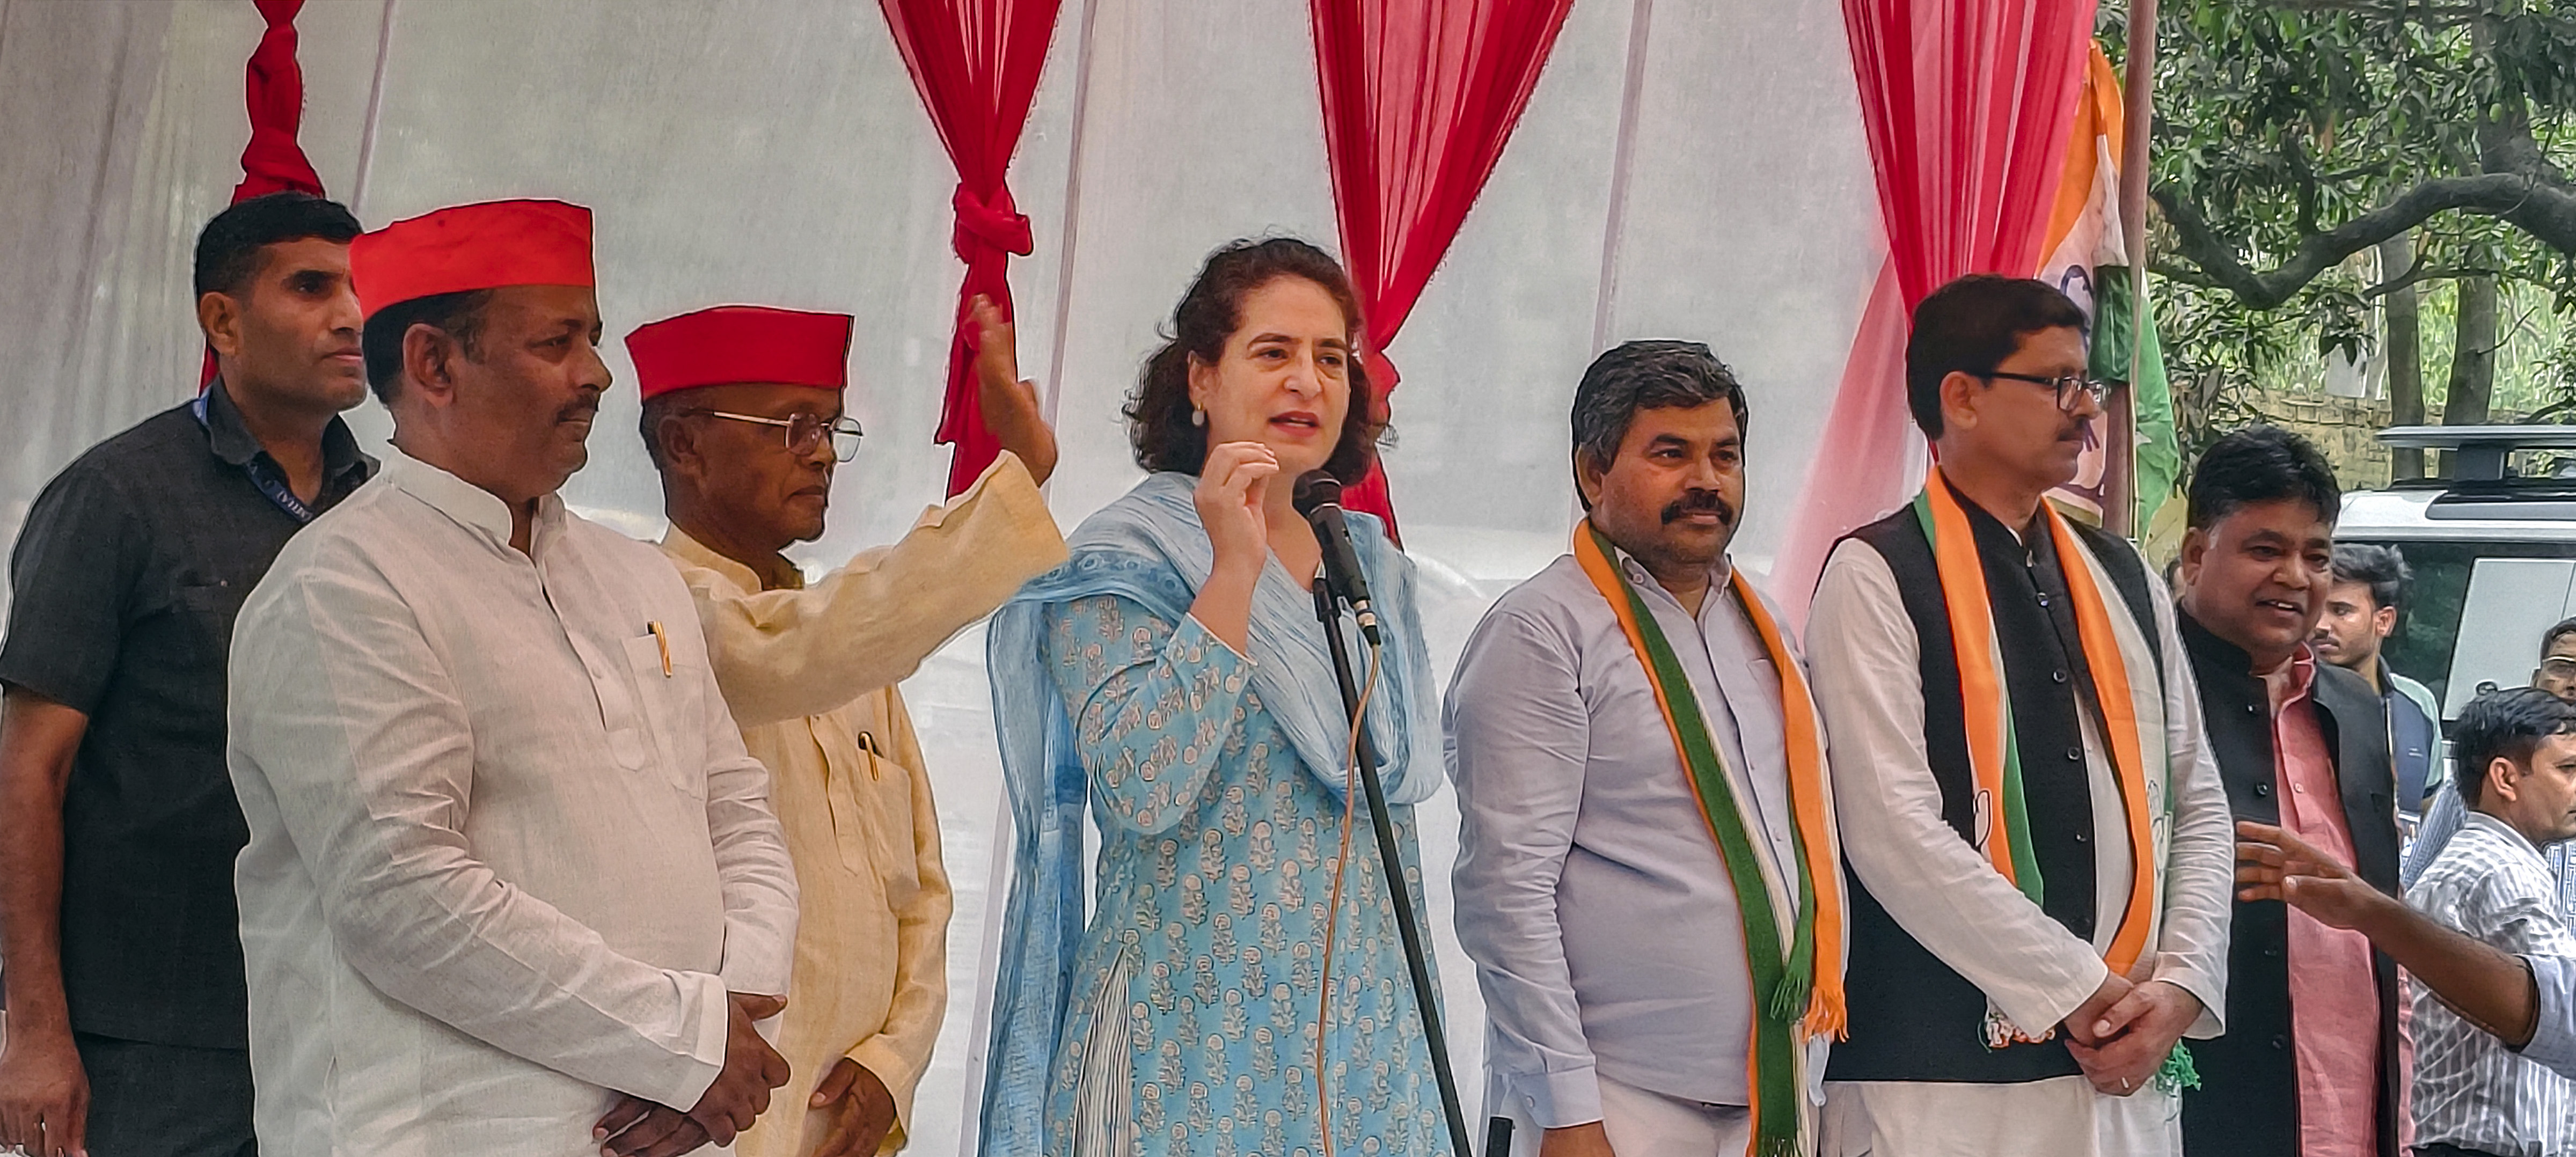 priyanka campaigns for rahul in rae bareli, slams pm for adani-ambani jibe